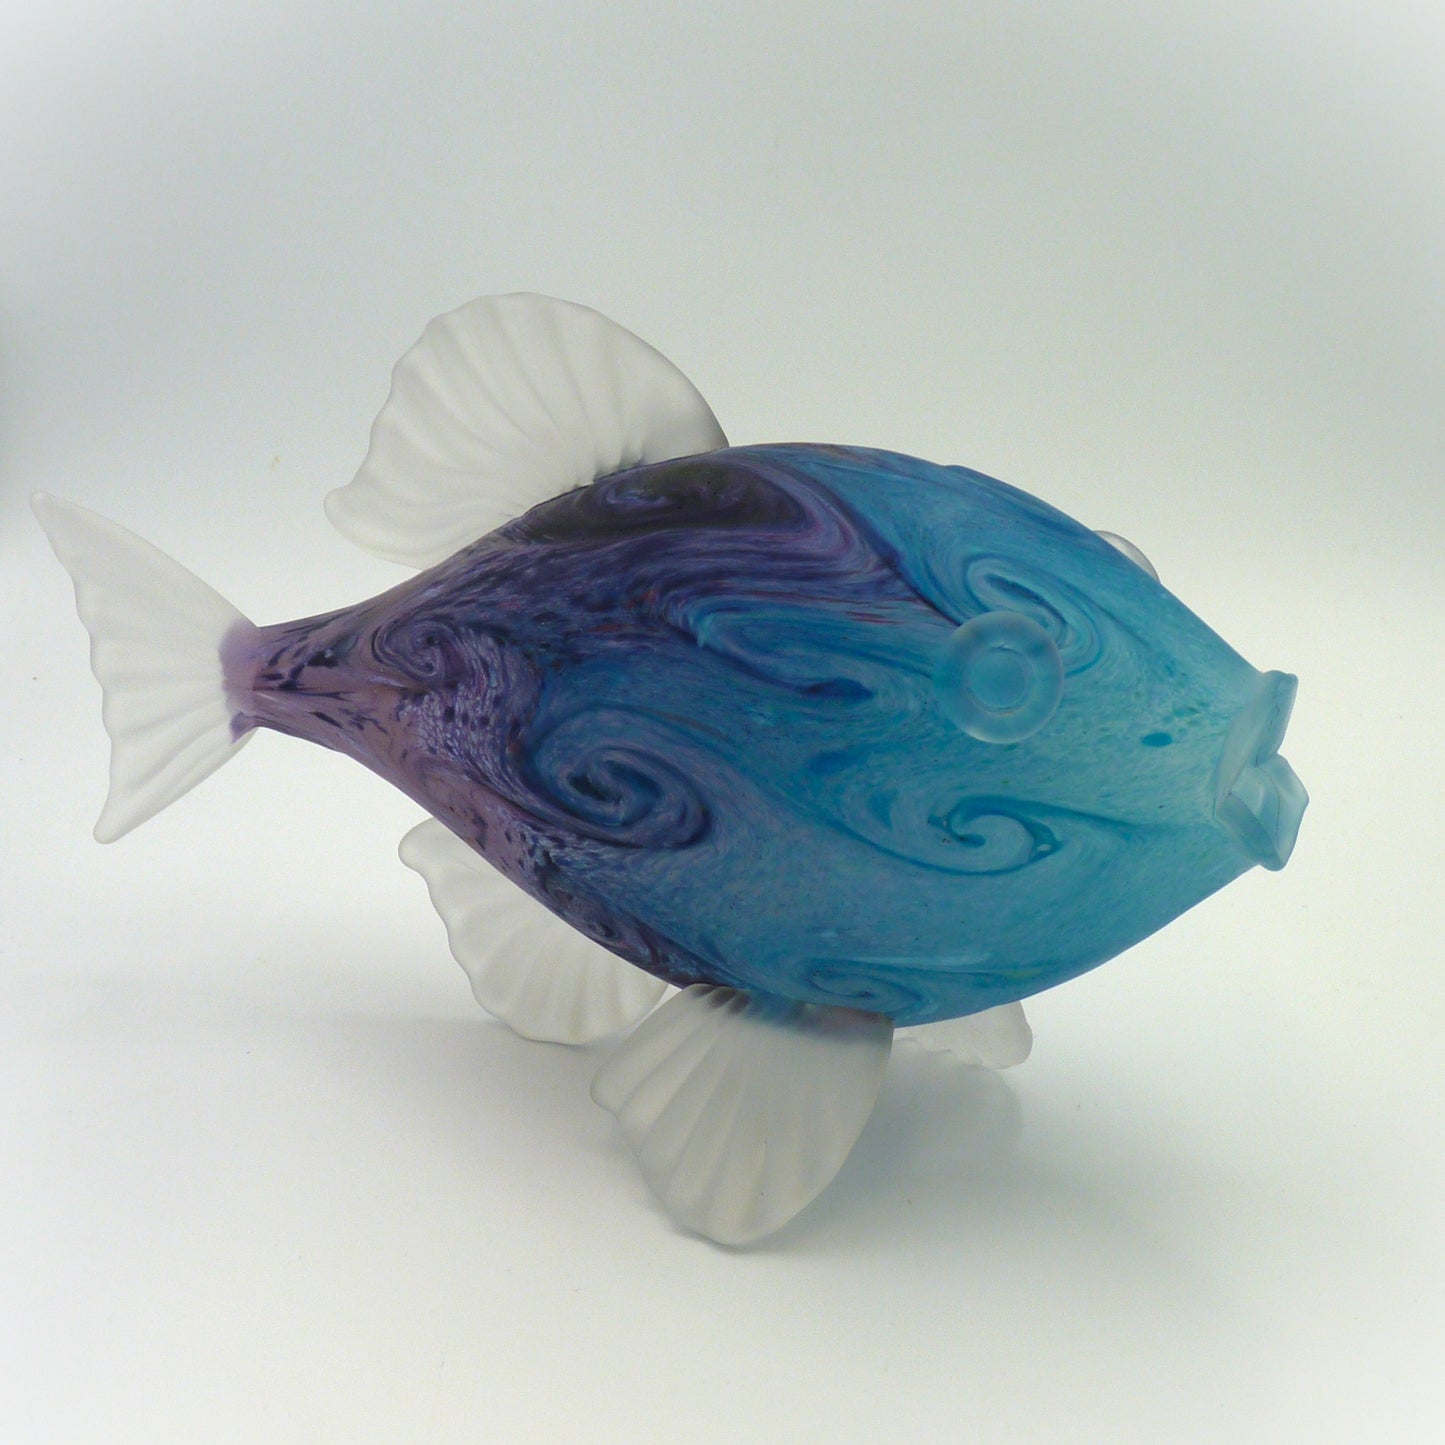 Belleau Fish Blue and Purple